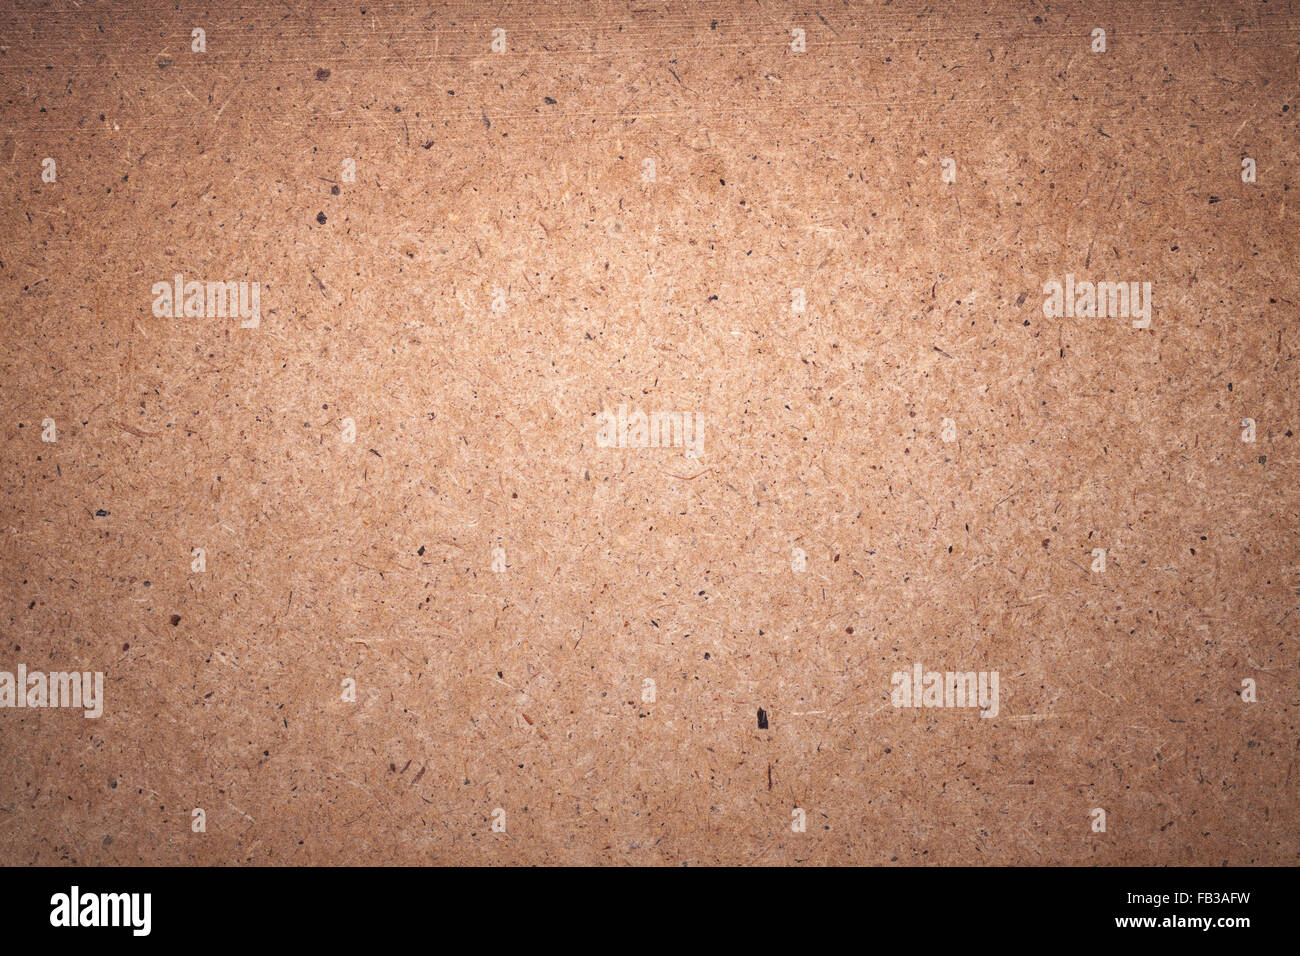 Rough cardboard sheet closeup background photo texture Stock Photo